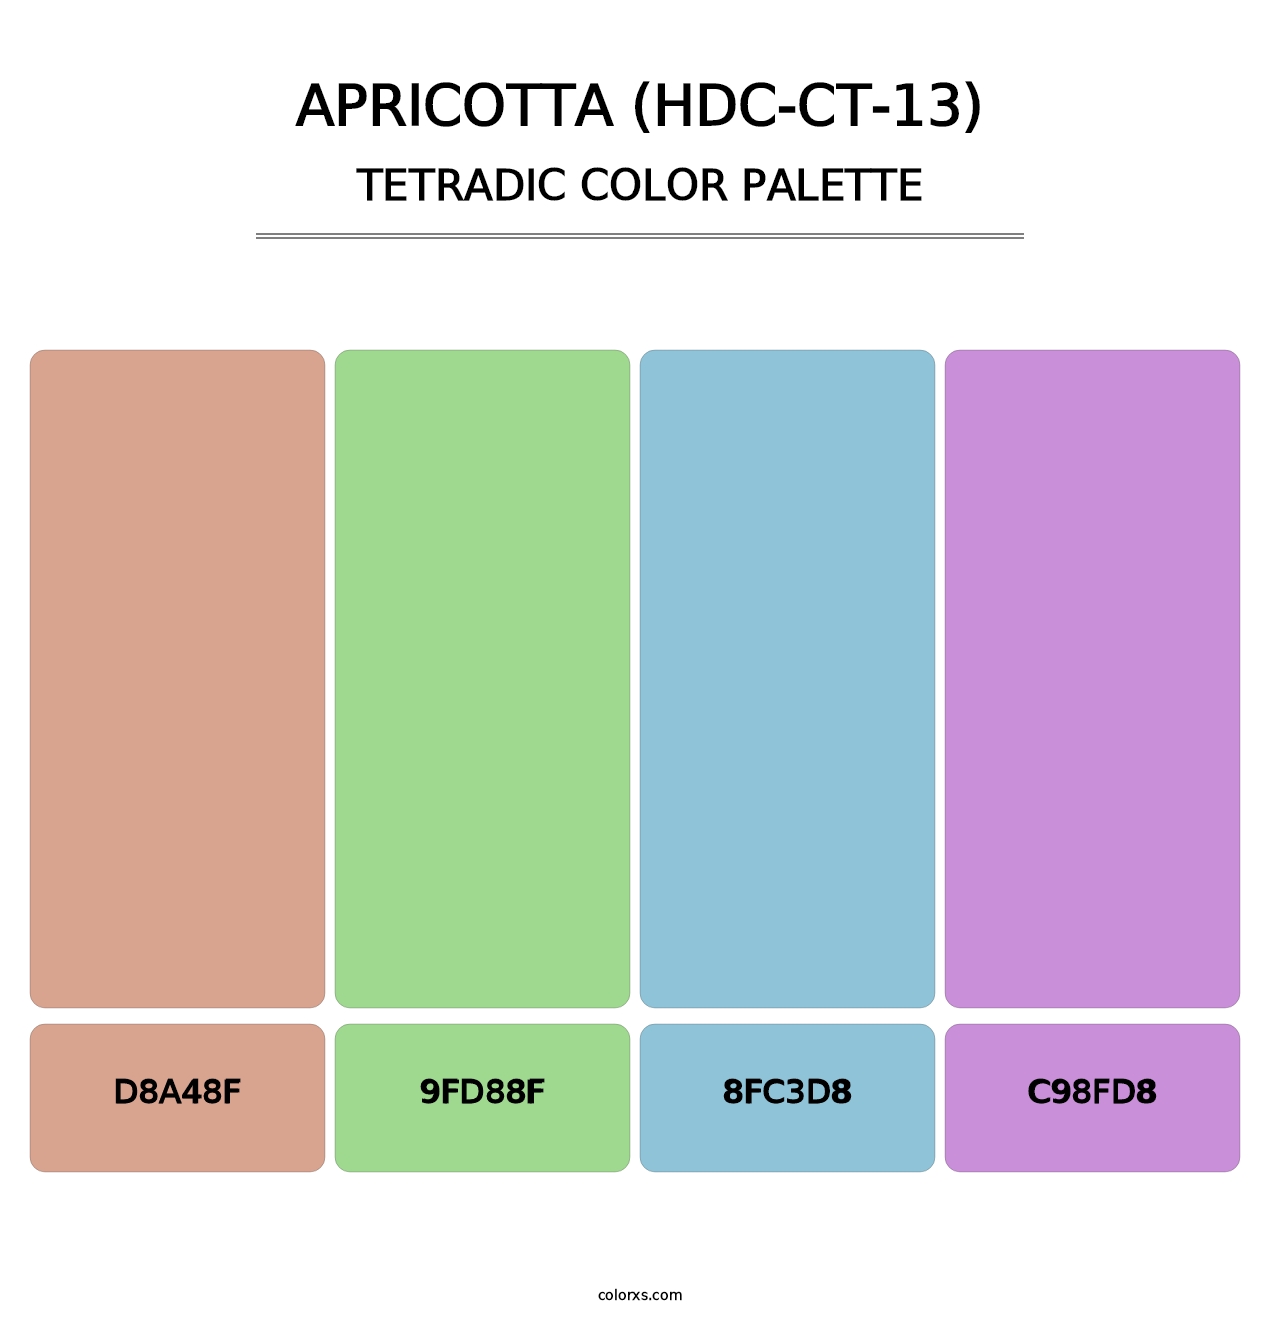 Apricotta (HDC-CT-13) - Tetradic Color Palette